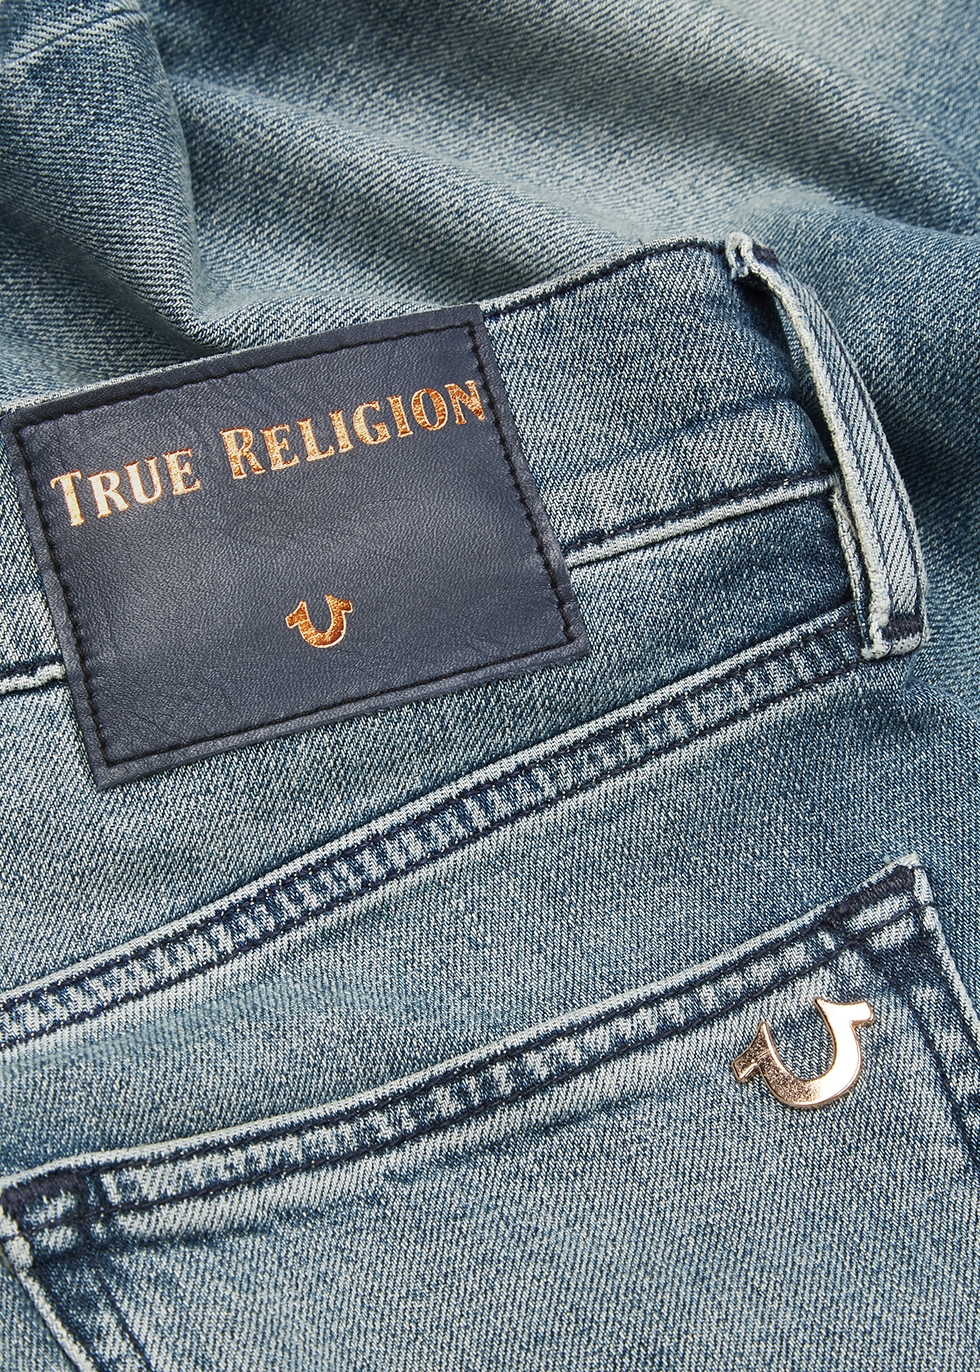 true religion skinny jean